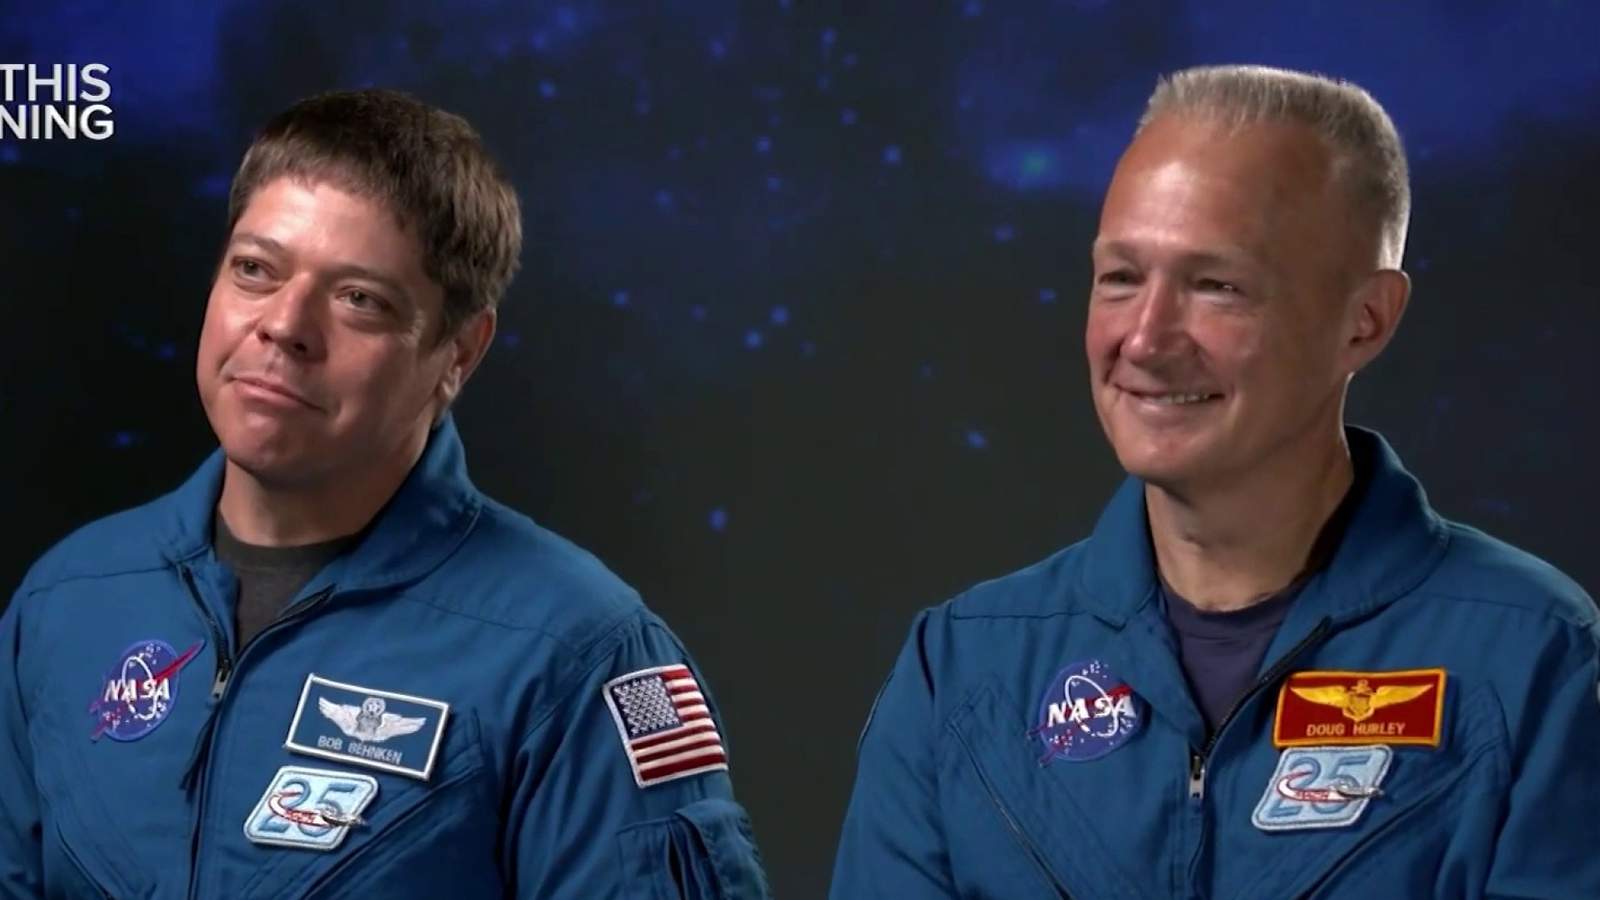 Calm under pressure: 2 NASA astronauts prepare to return glory of human spaceflight to America